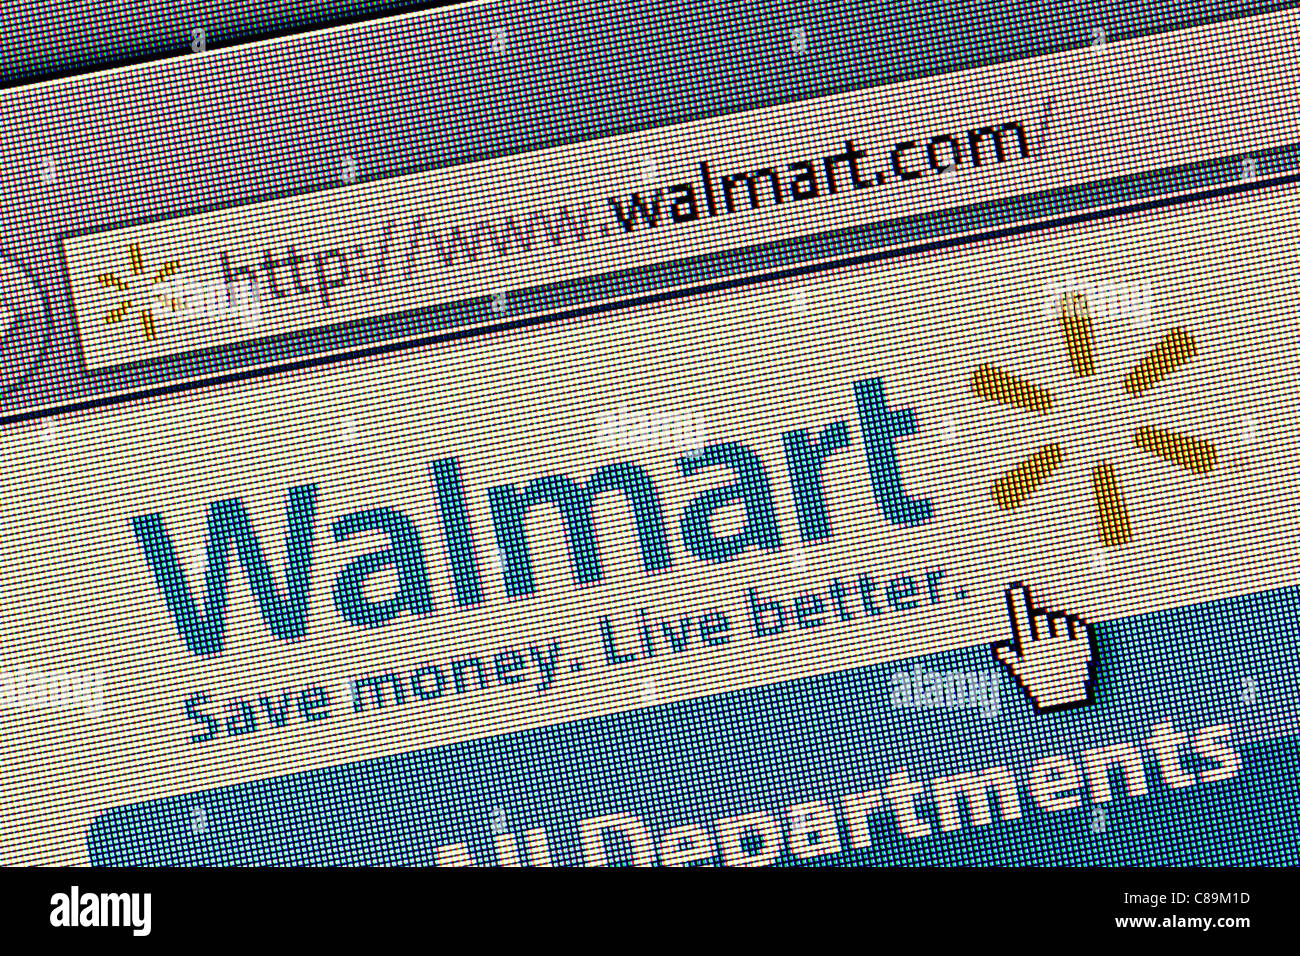 Walmart logo and website close up Stock Photo